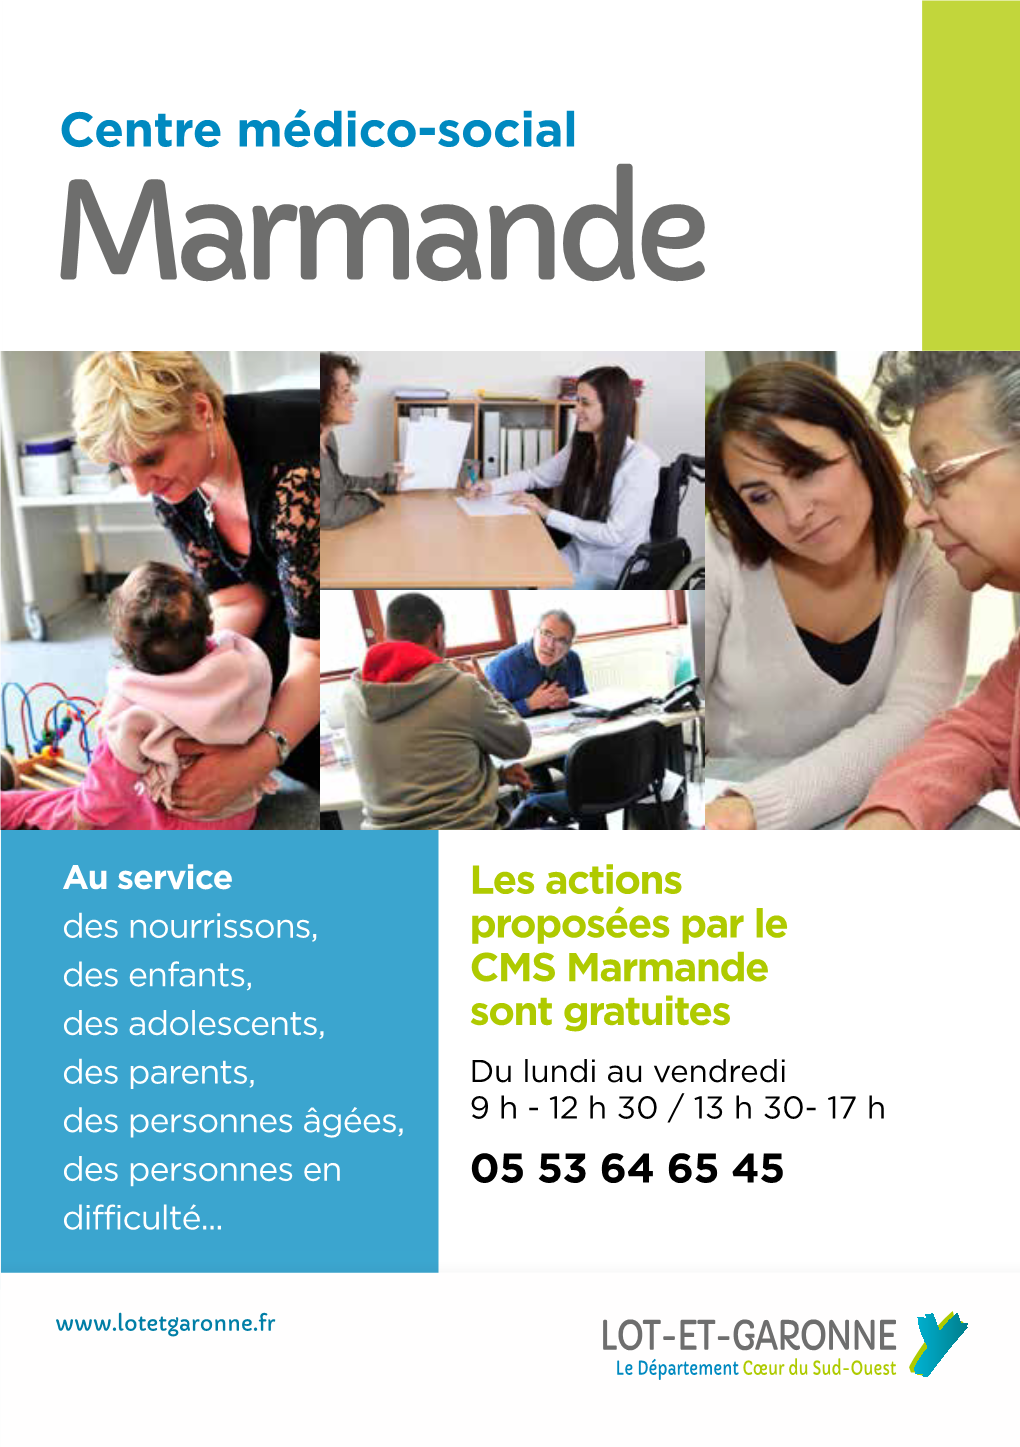 Centre Médico-Social Marmande